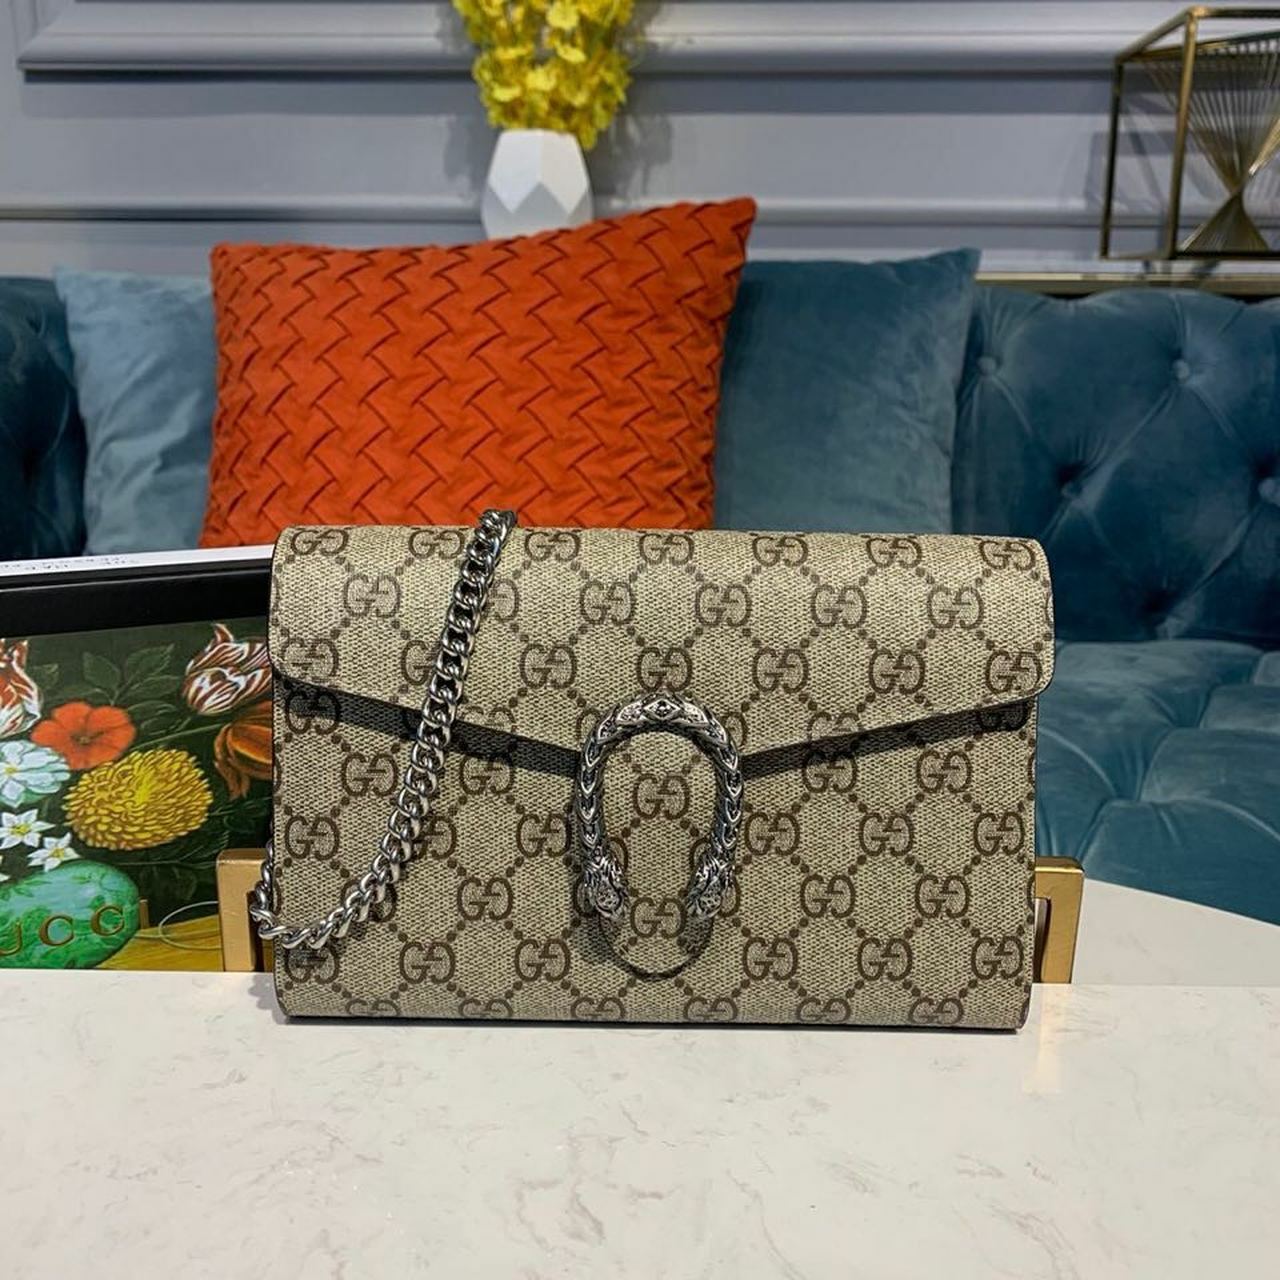 Gucci WOC Dionysus Shoulder Bag 20cm Suede/Calfskin Leather Trim Fall/Winter 2019 Collection, Beige - Ganebet Store